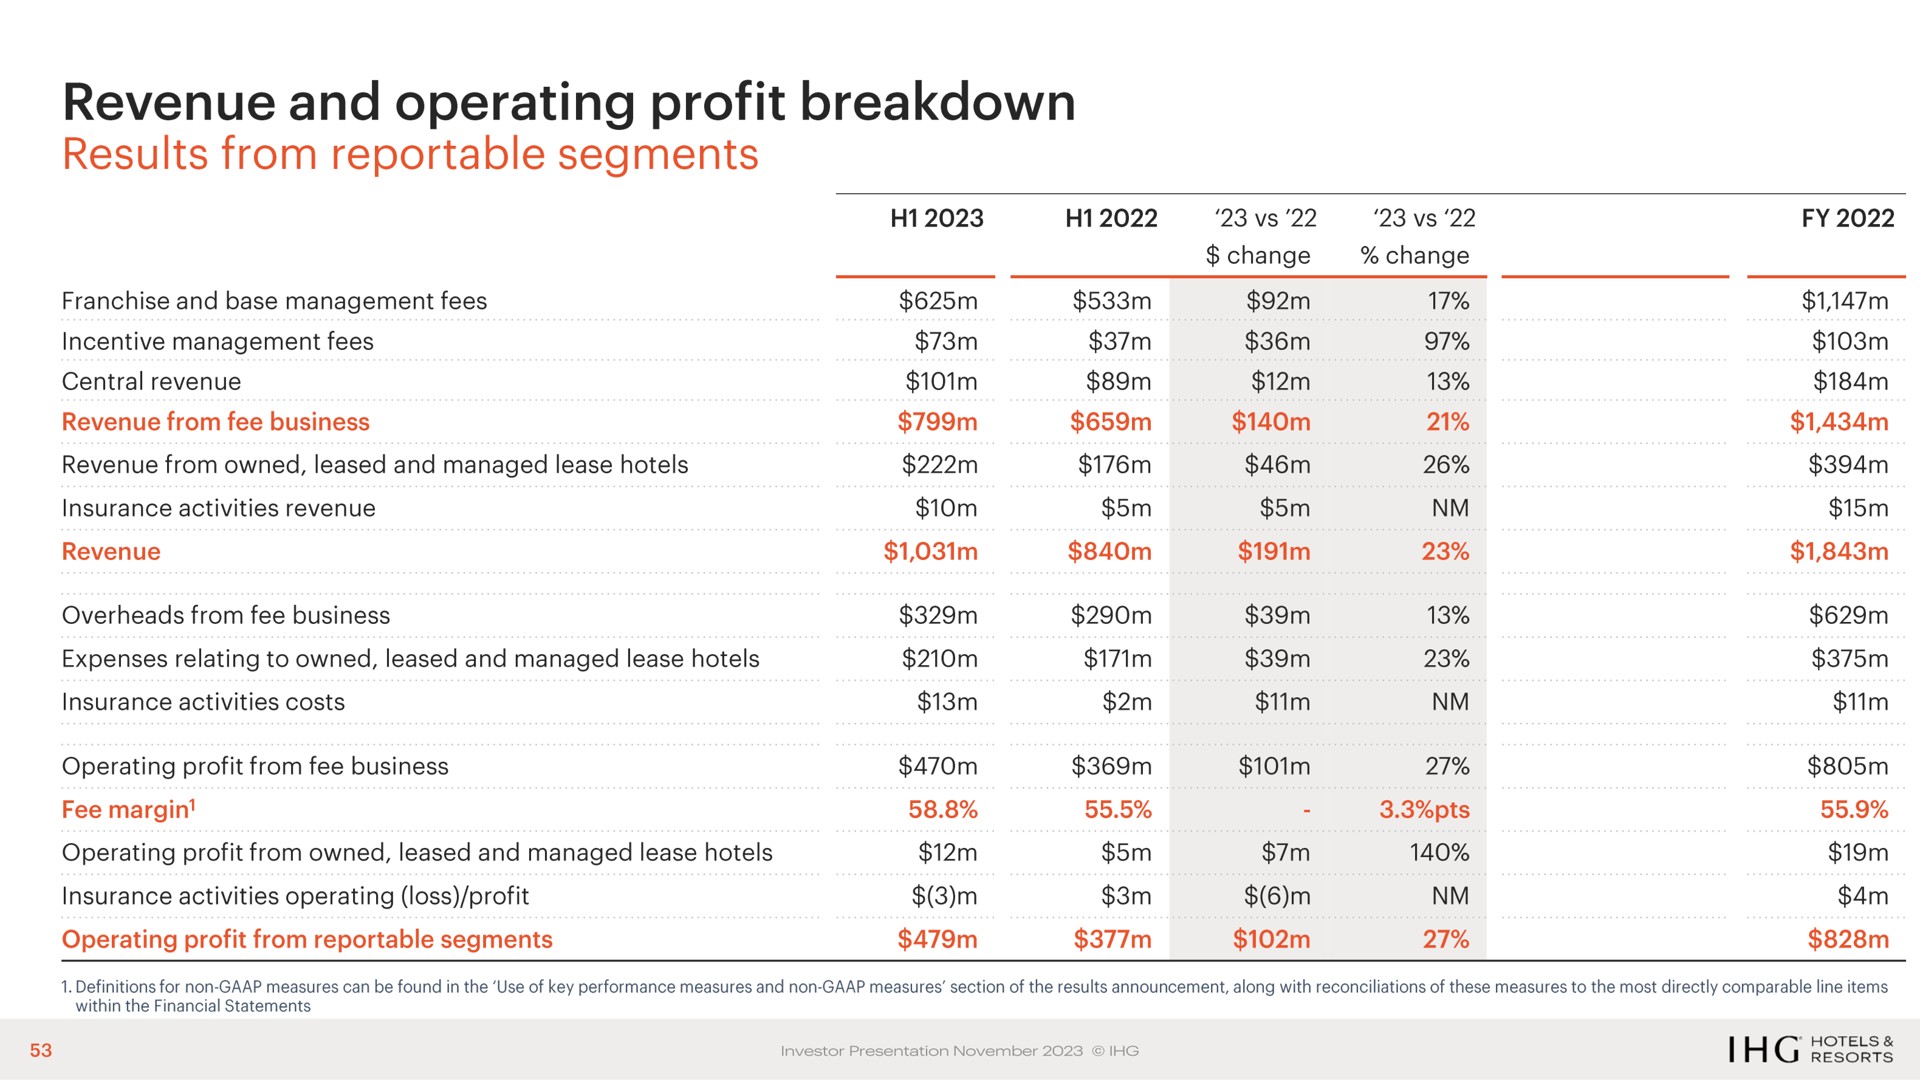 revenue and operating profit breakdown | IHG Hotels